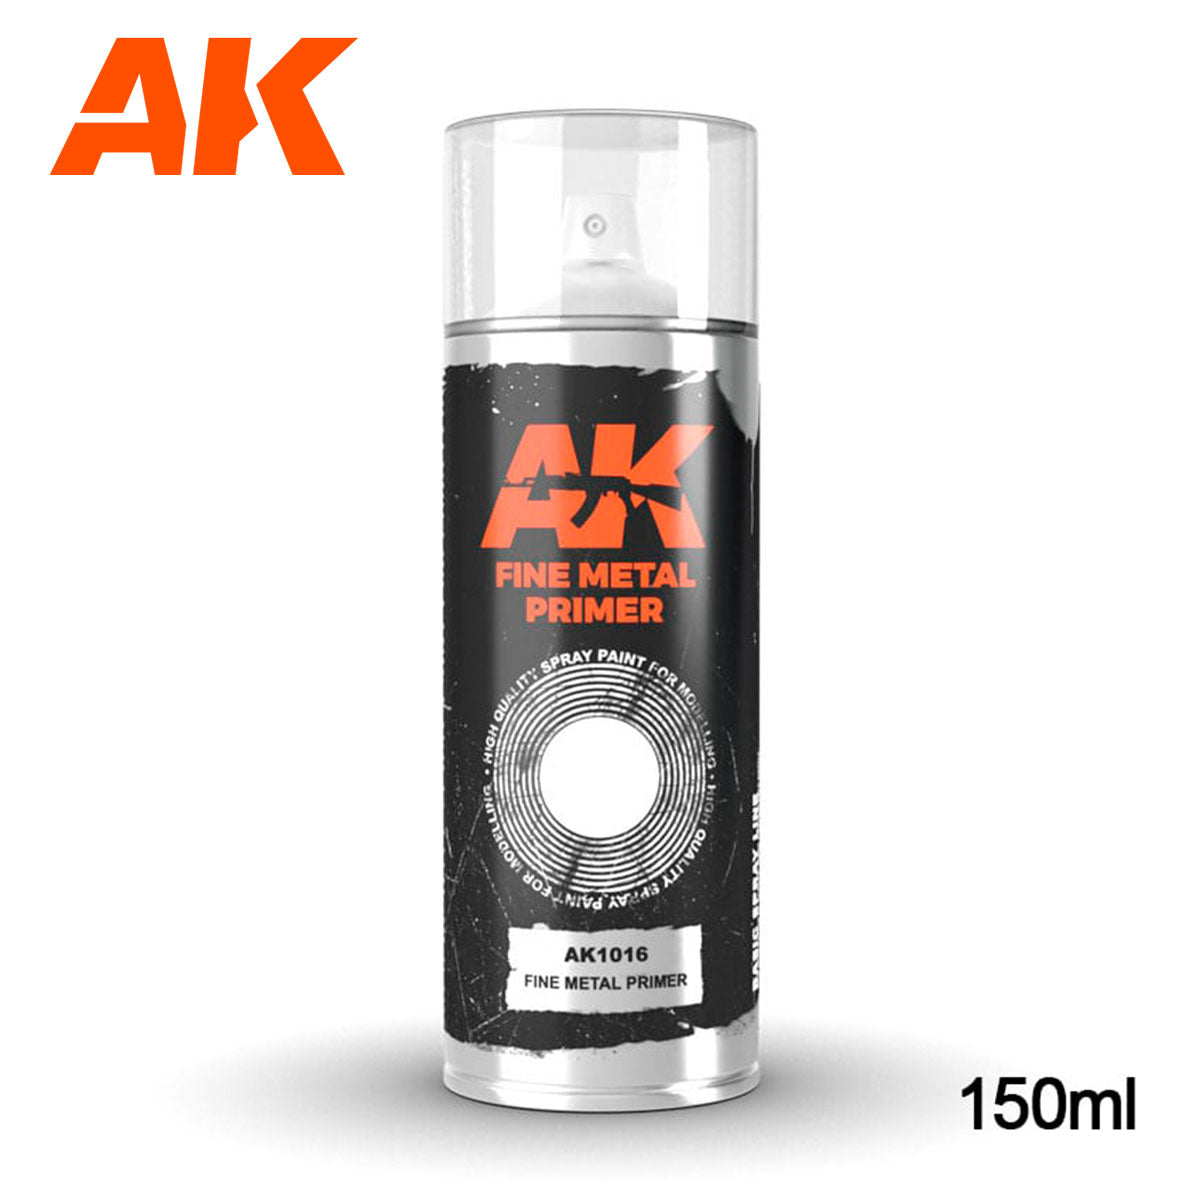 AK Interactive 3G Grey Primer 100ml